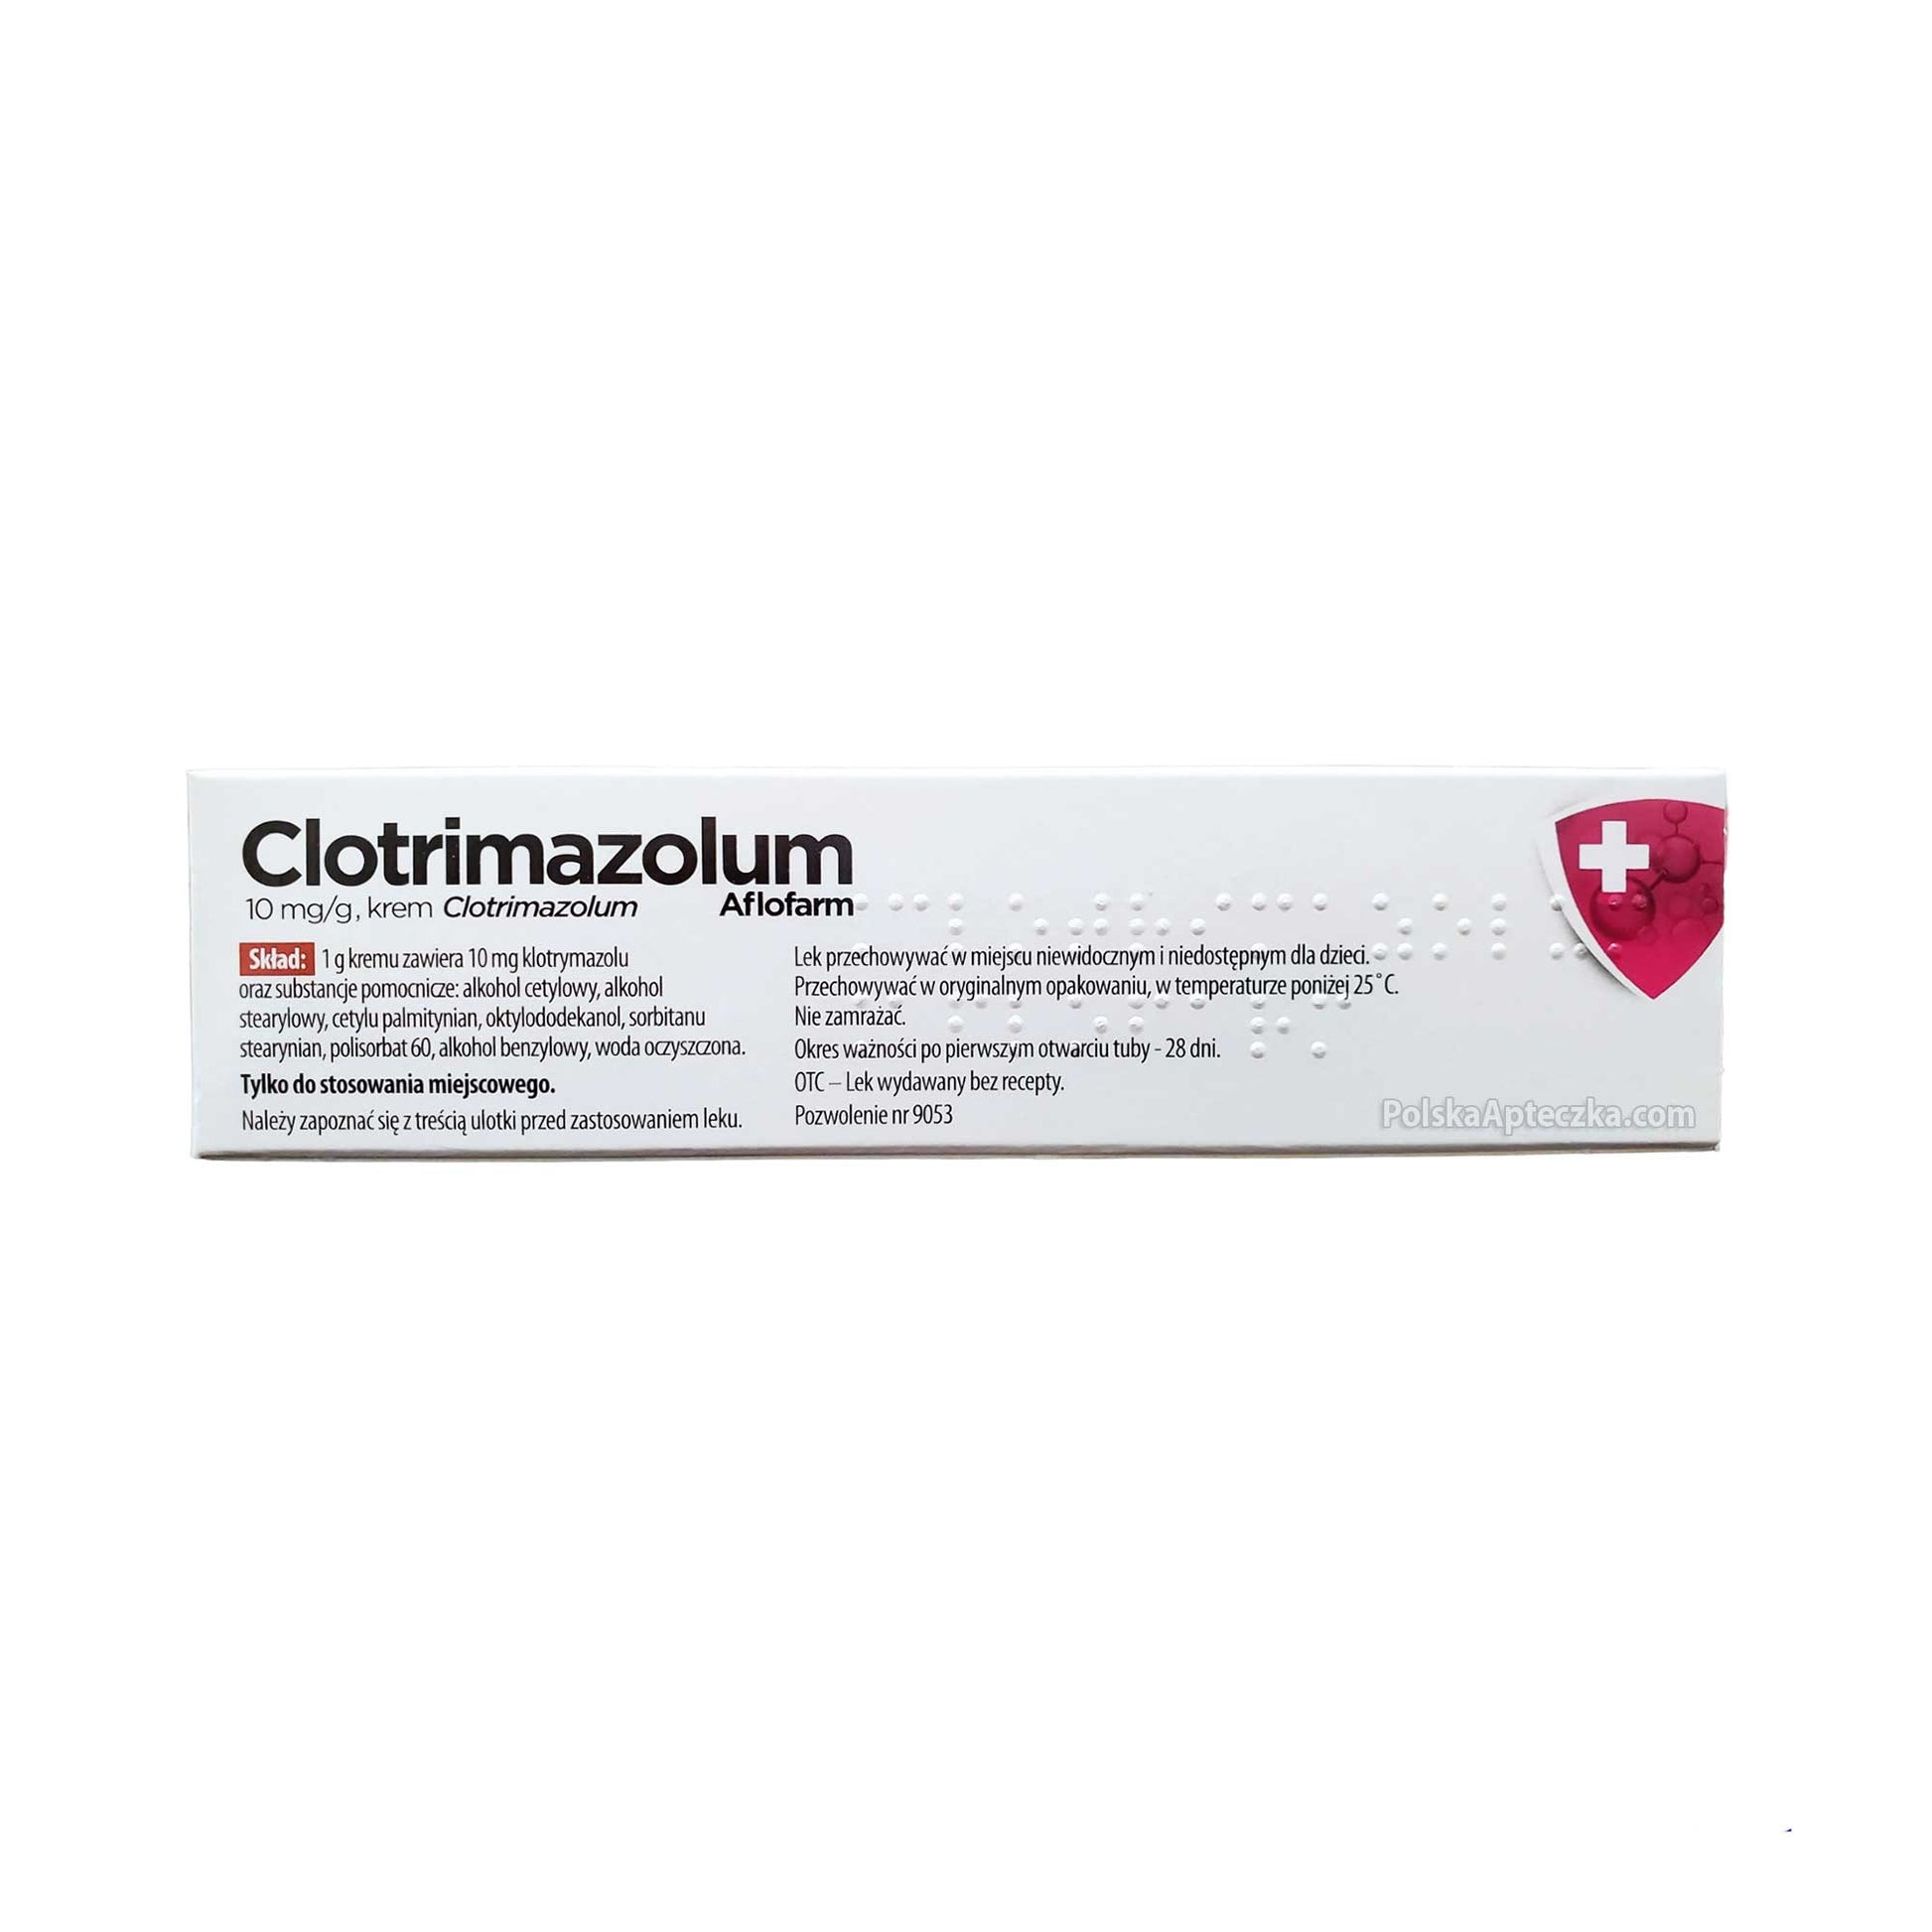 Clotrimazolum 10mg/g krem, 20 g